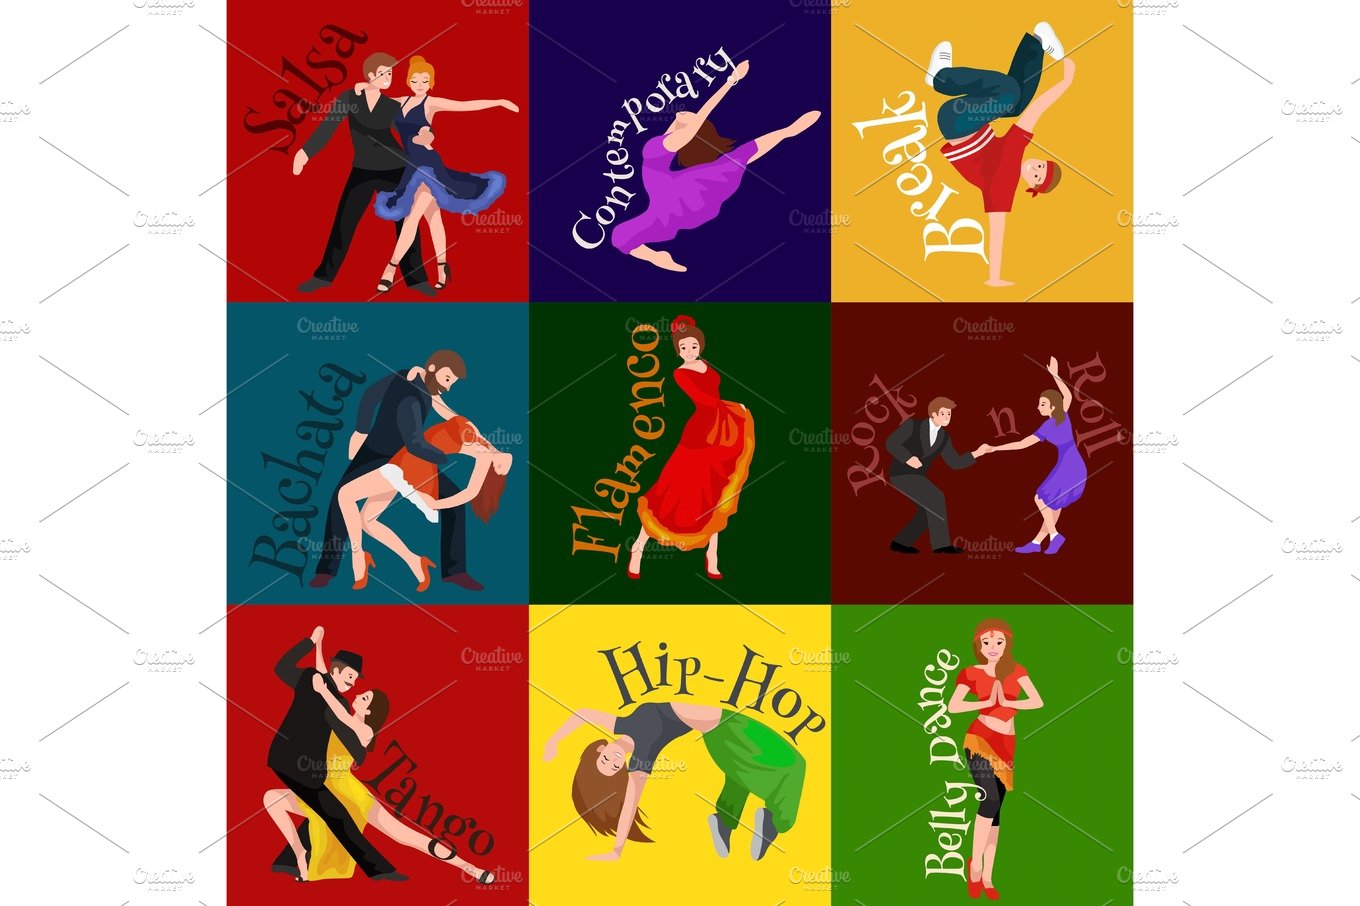 Dancing People, Dancer Bachata, Hiphop, Salsa, Indian, Ballet, Strip, Rock ... cover image.